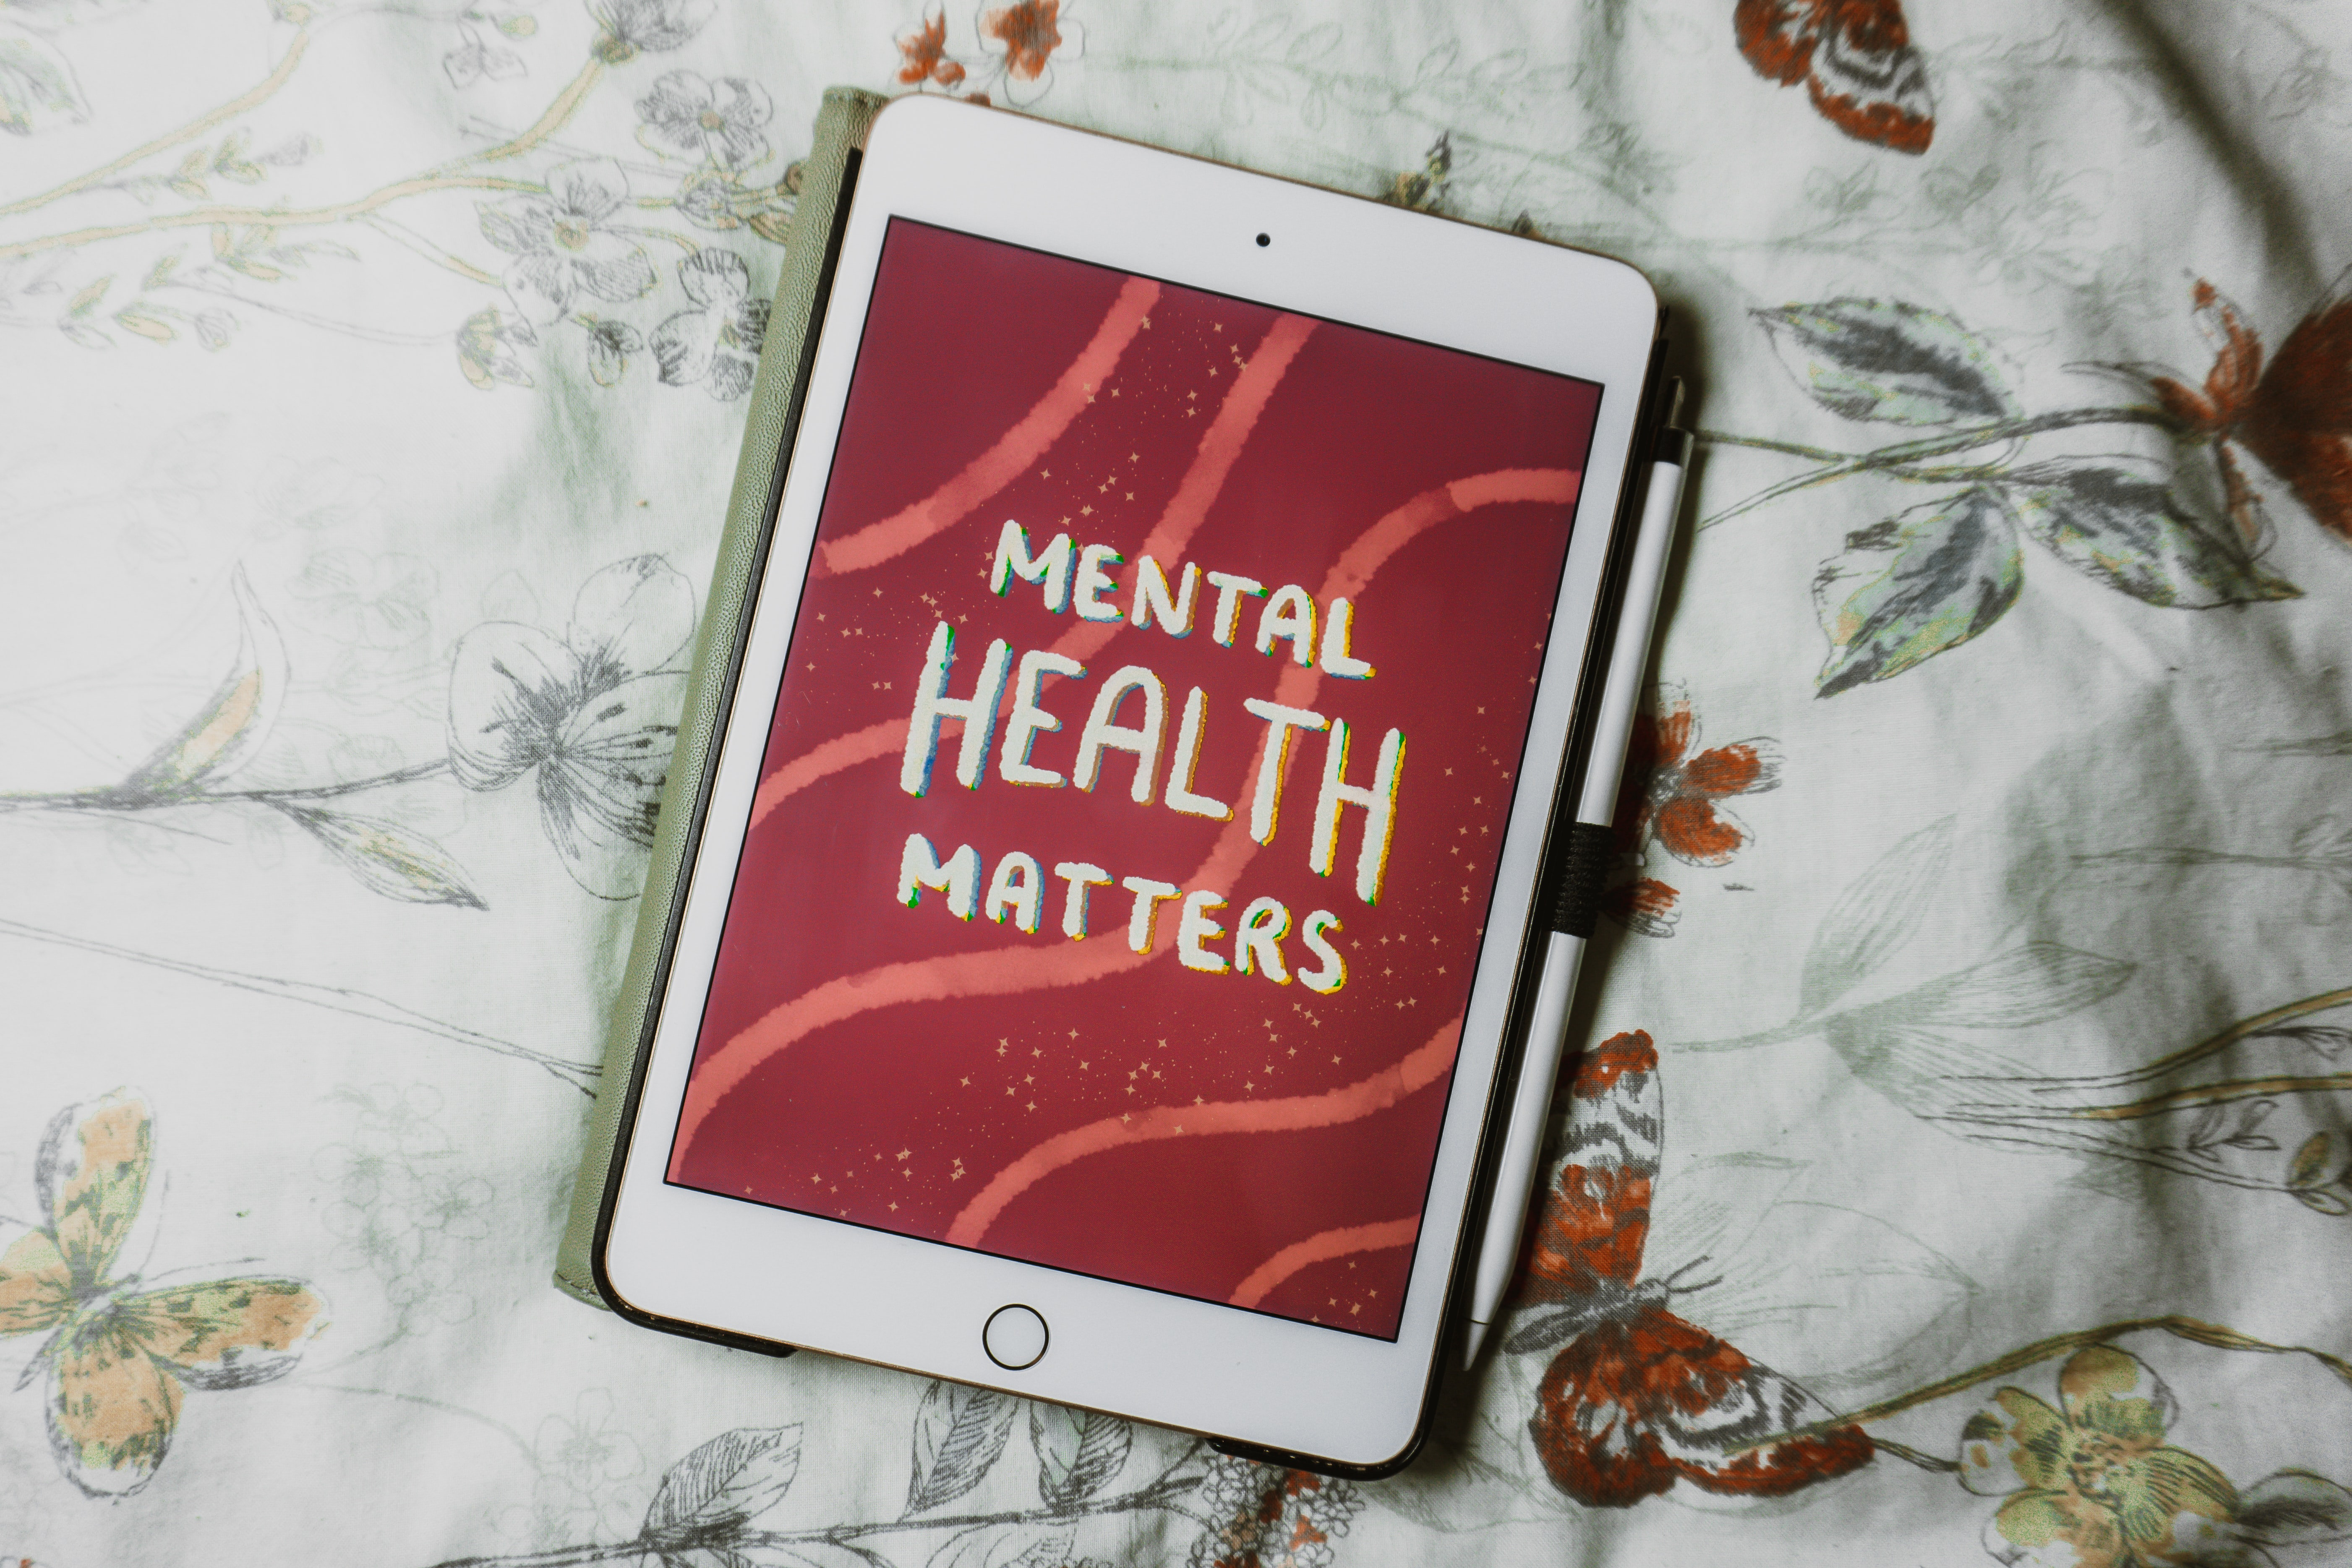 Mental health matters (image of ipad)